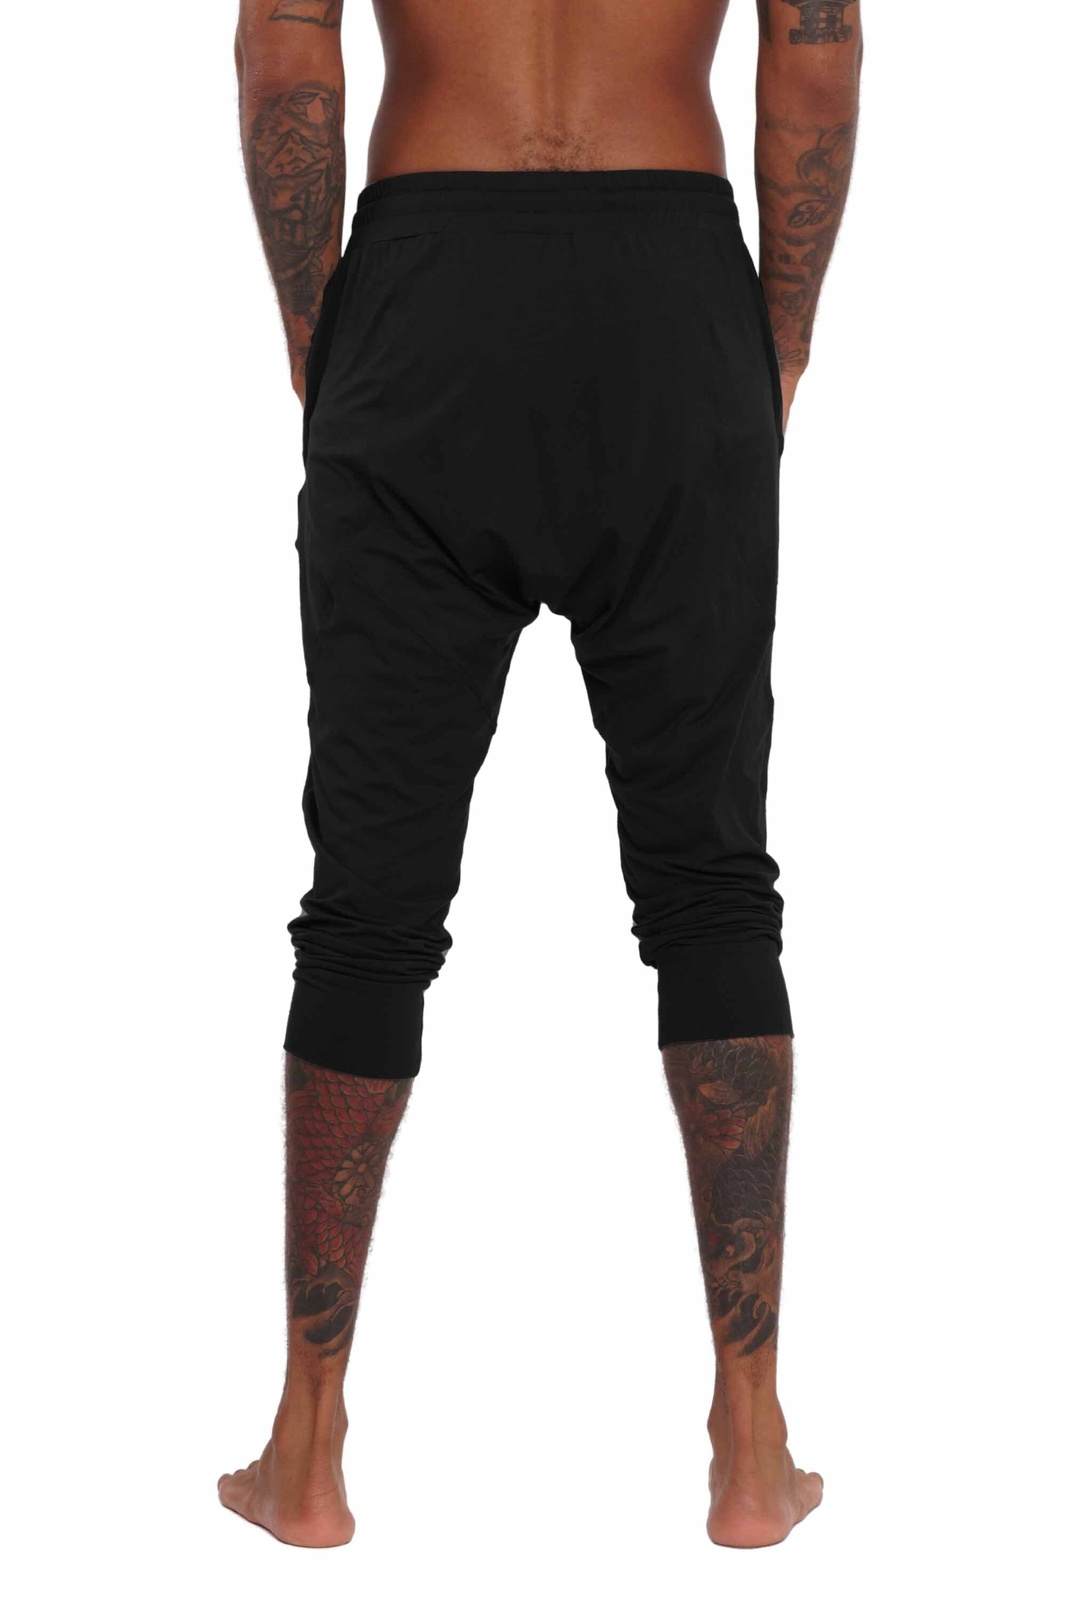 Mens black 3/4 length jogger shorts from Ekoluxe